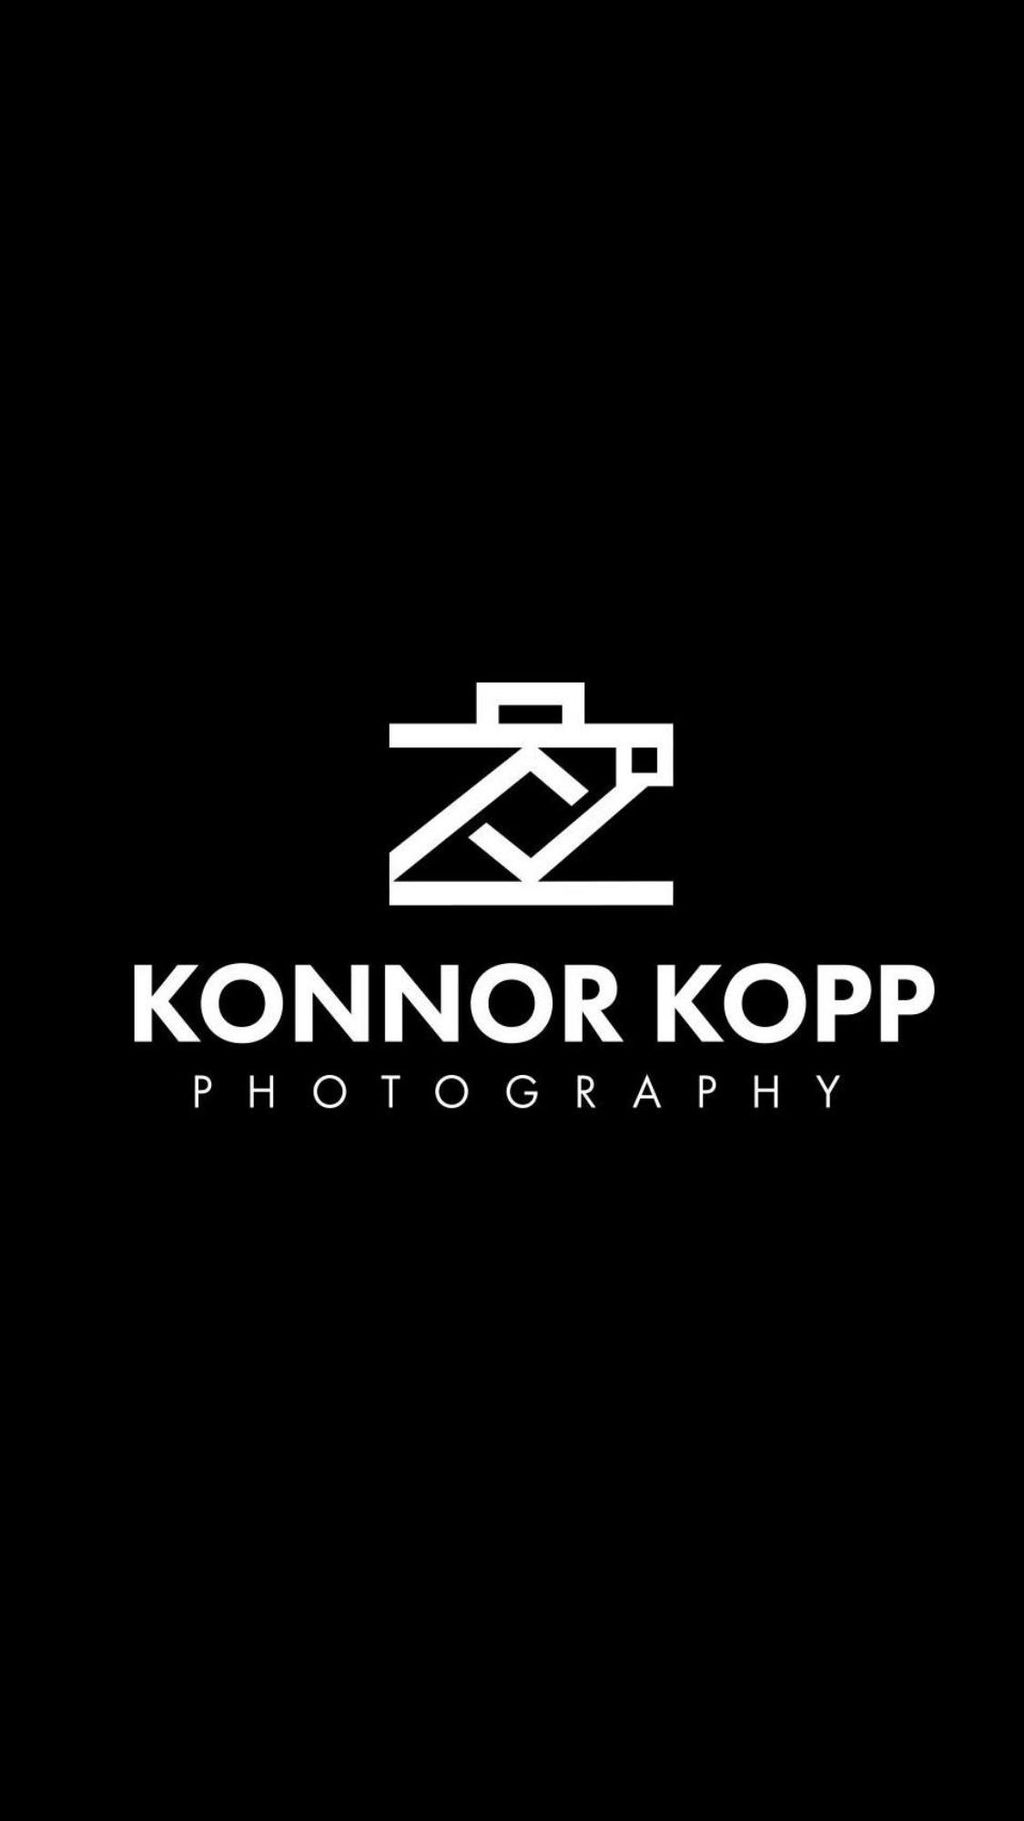 Konnor Kopp Photography